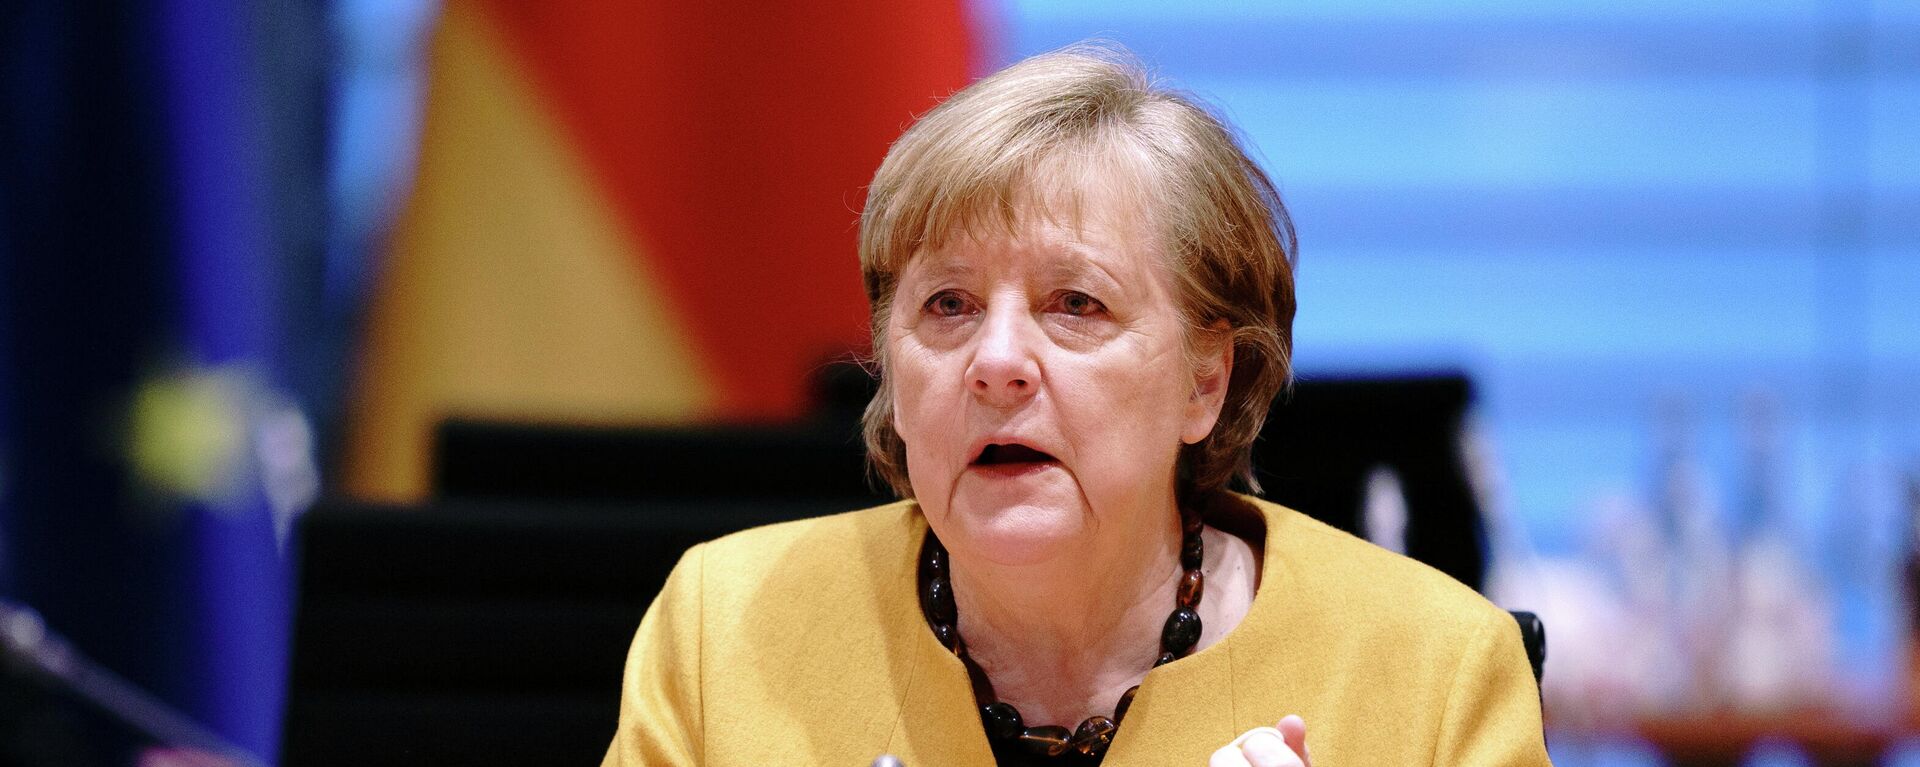 Angela Merkel, canciller alemana - Sputnik Mundo, 1920, 20.04.2021